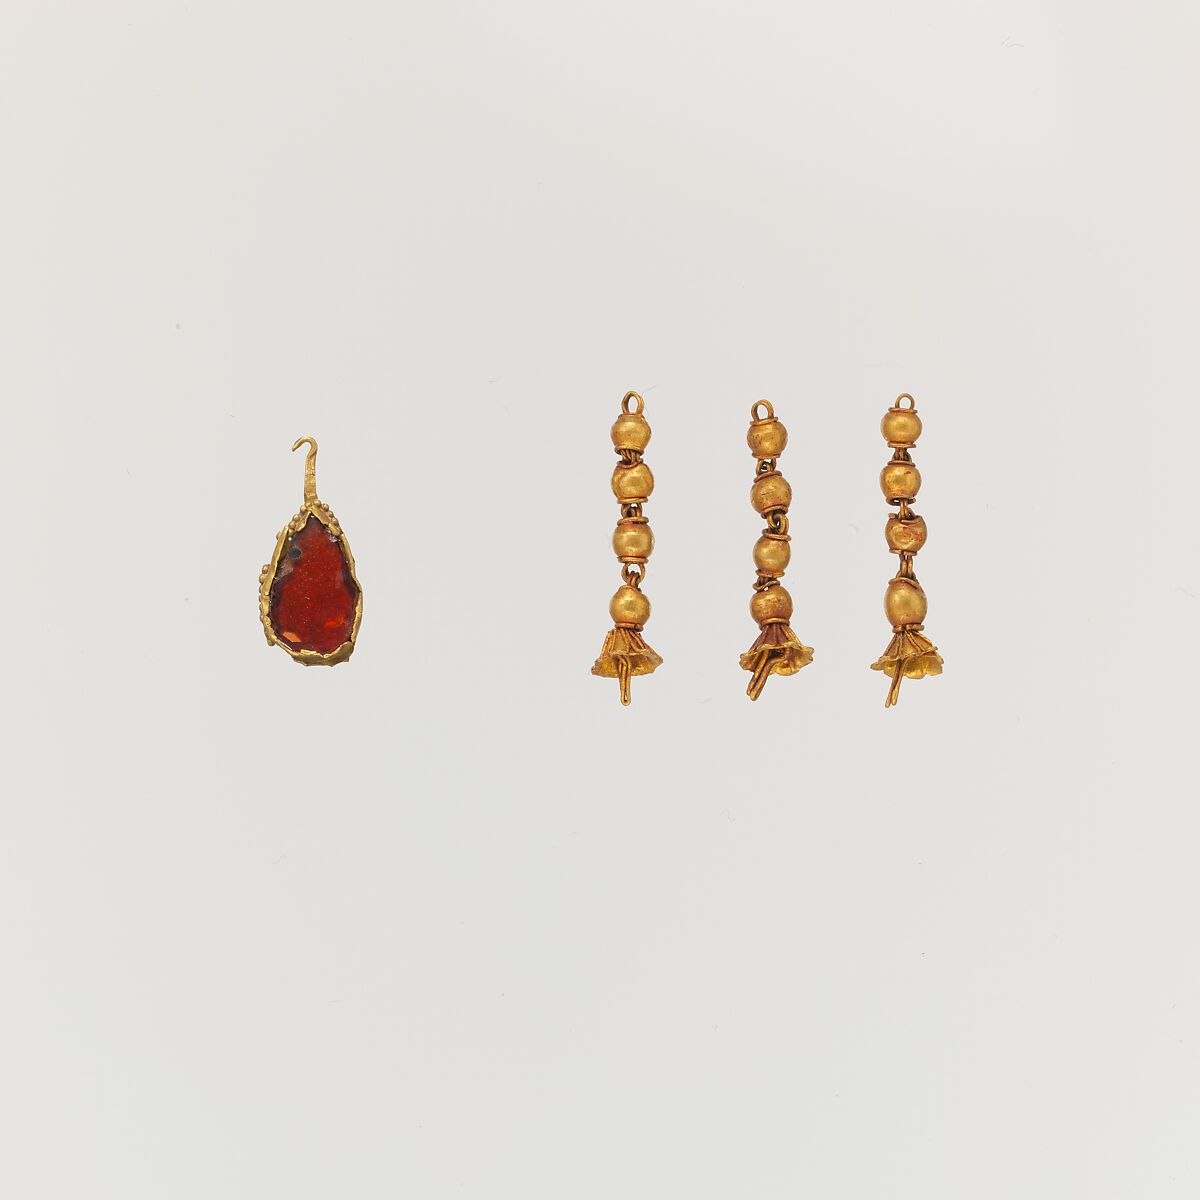 Gold pendant with garnet and three gold tassels, Gold, garnet, Greek, South Italian, Tarentine 